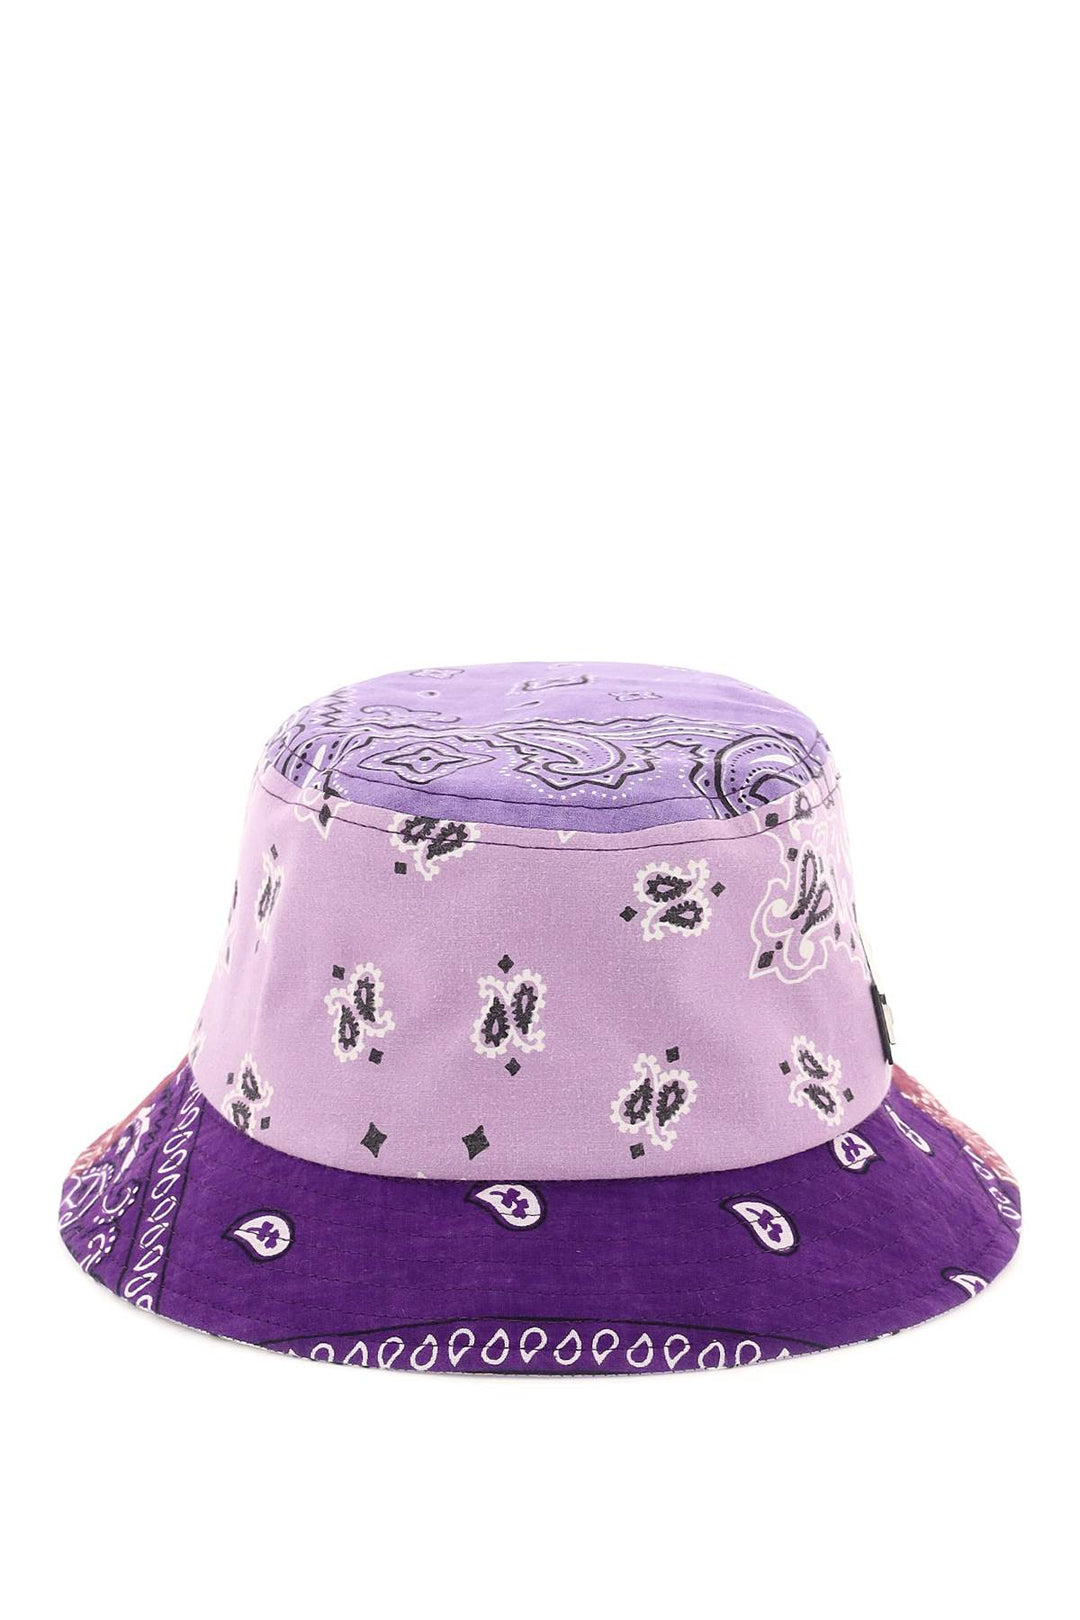 Children Of The Discordance Bandana Bucket Hat   Viola